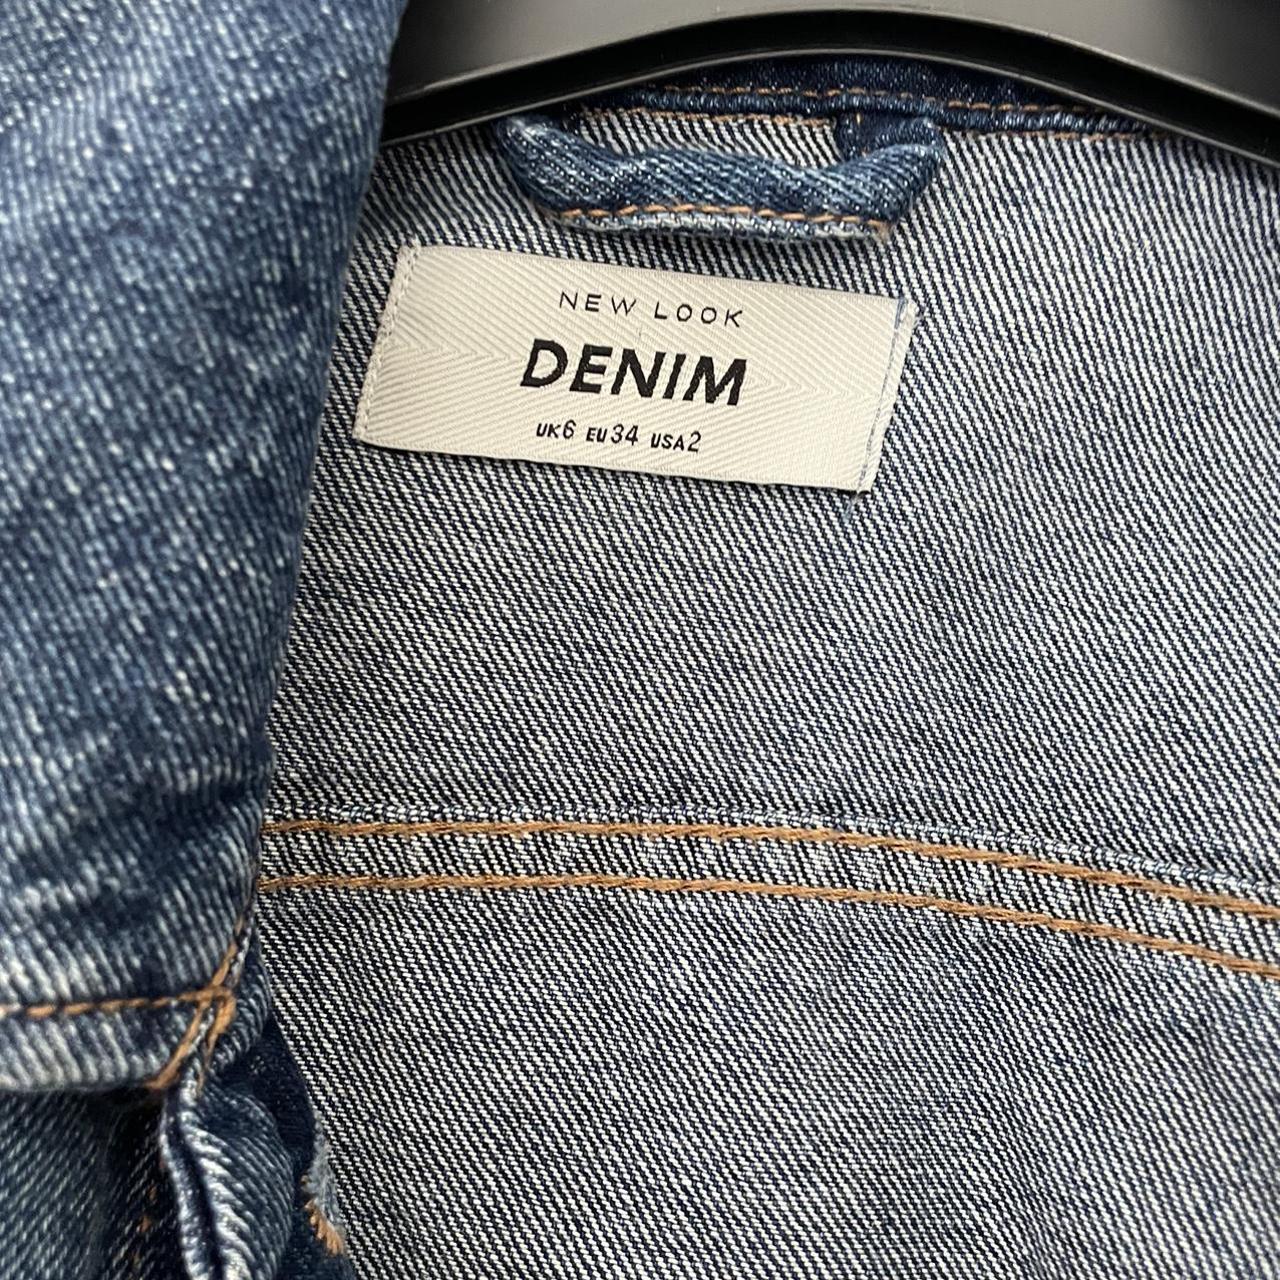 Denim jacket from new look size 6 blue #denim #jacket - Depop